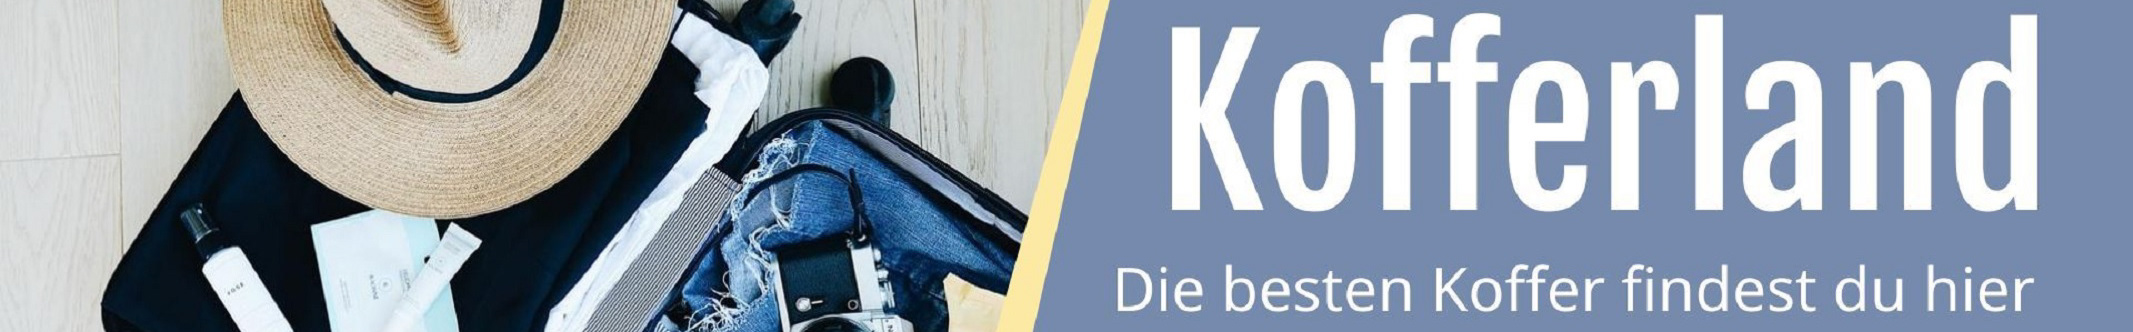 Kofferland Tipps's profile banner